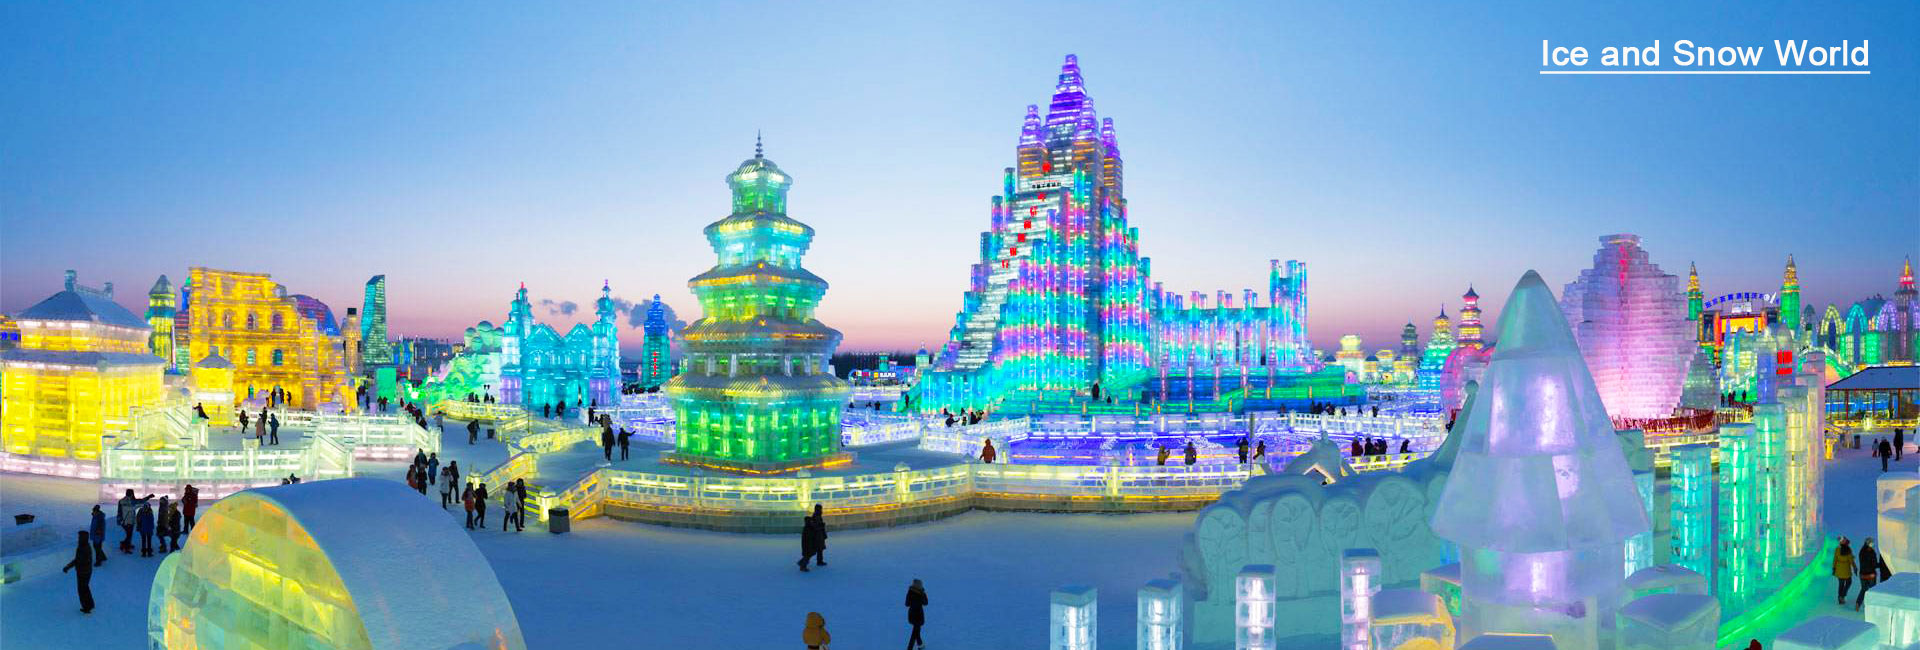 Harbin Ice Festival Tour